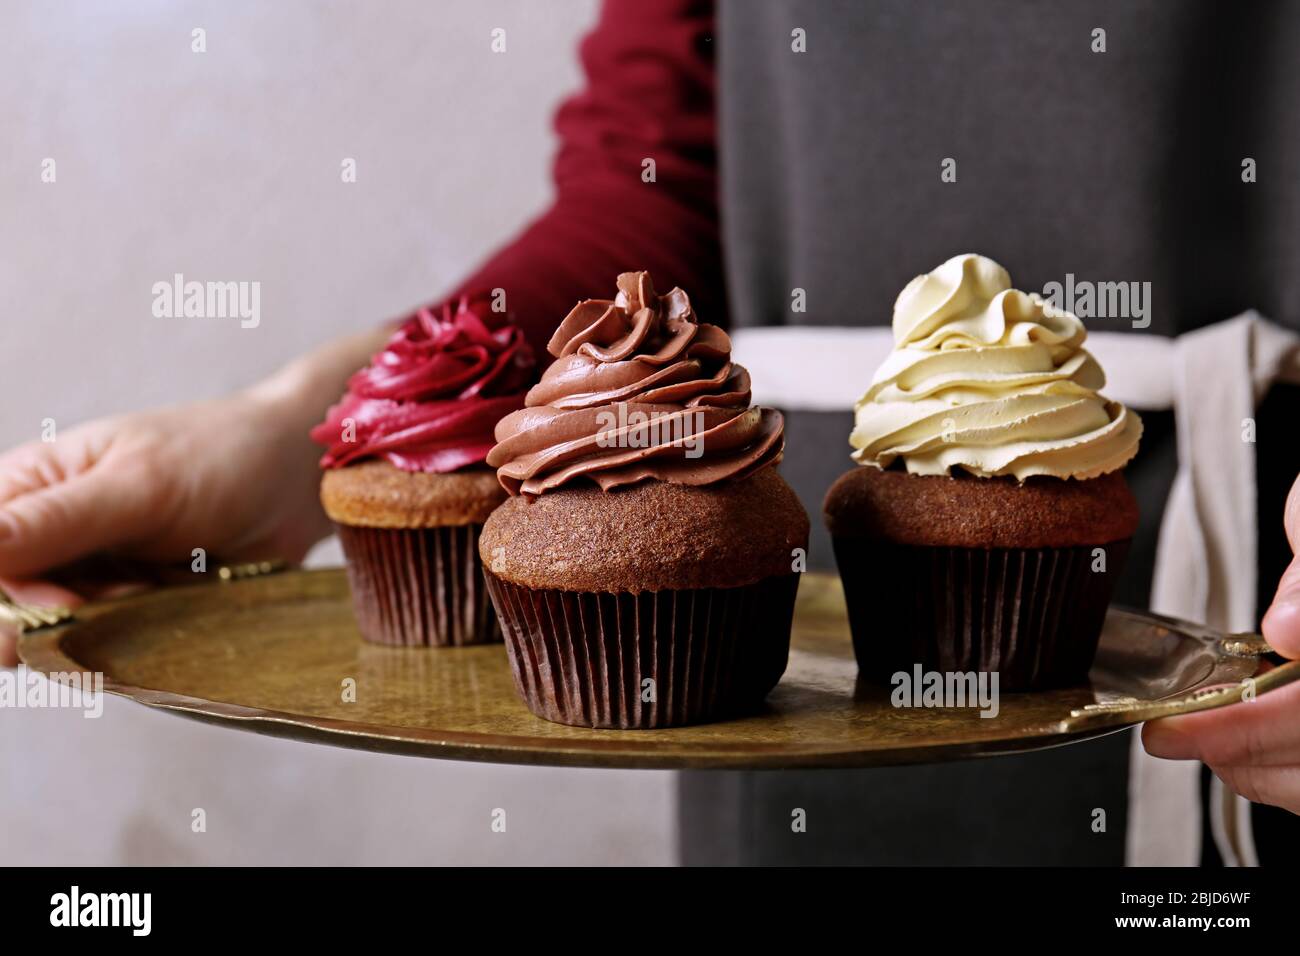 https://c8.alamy.com/comp/2BJD6WF/woman-holding-tray-with-tasty-cupcakes-close-up-2BJD6WF.jpg